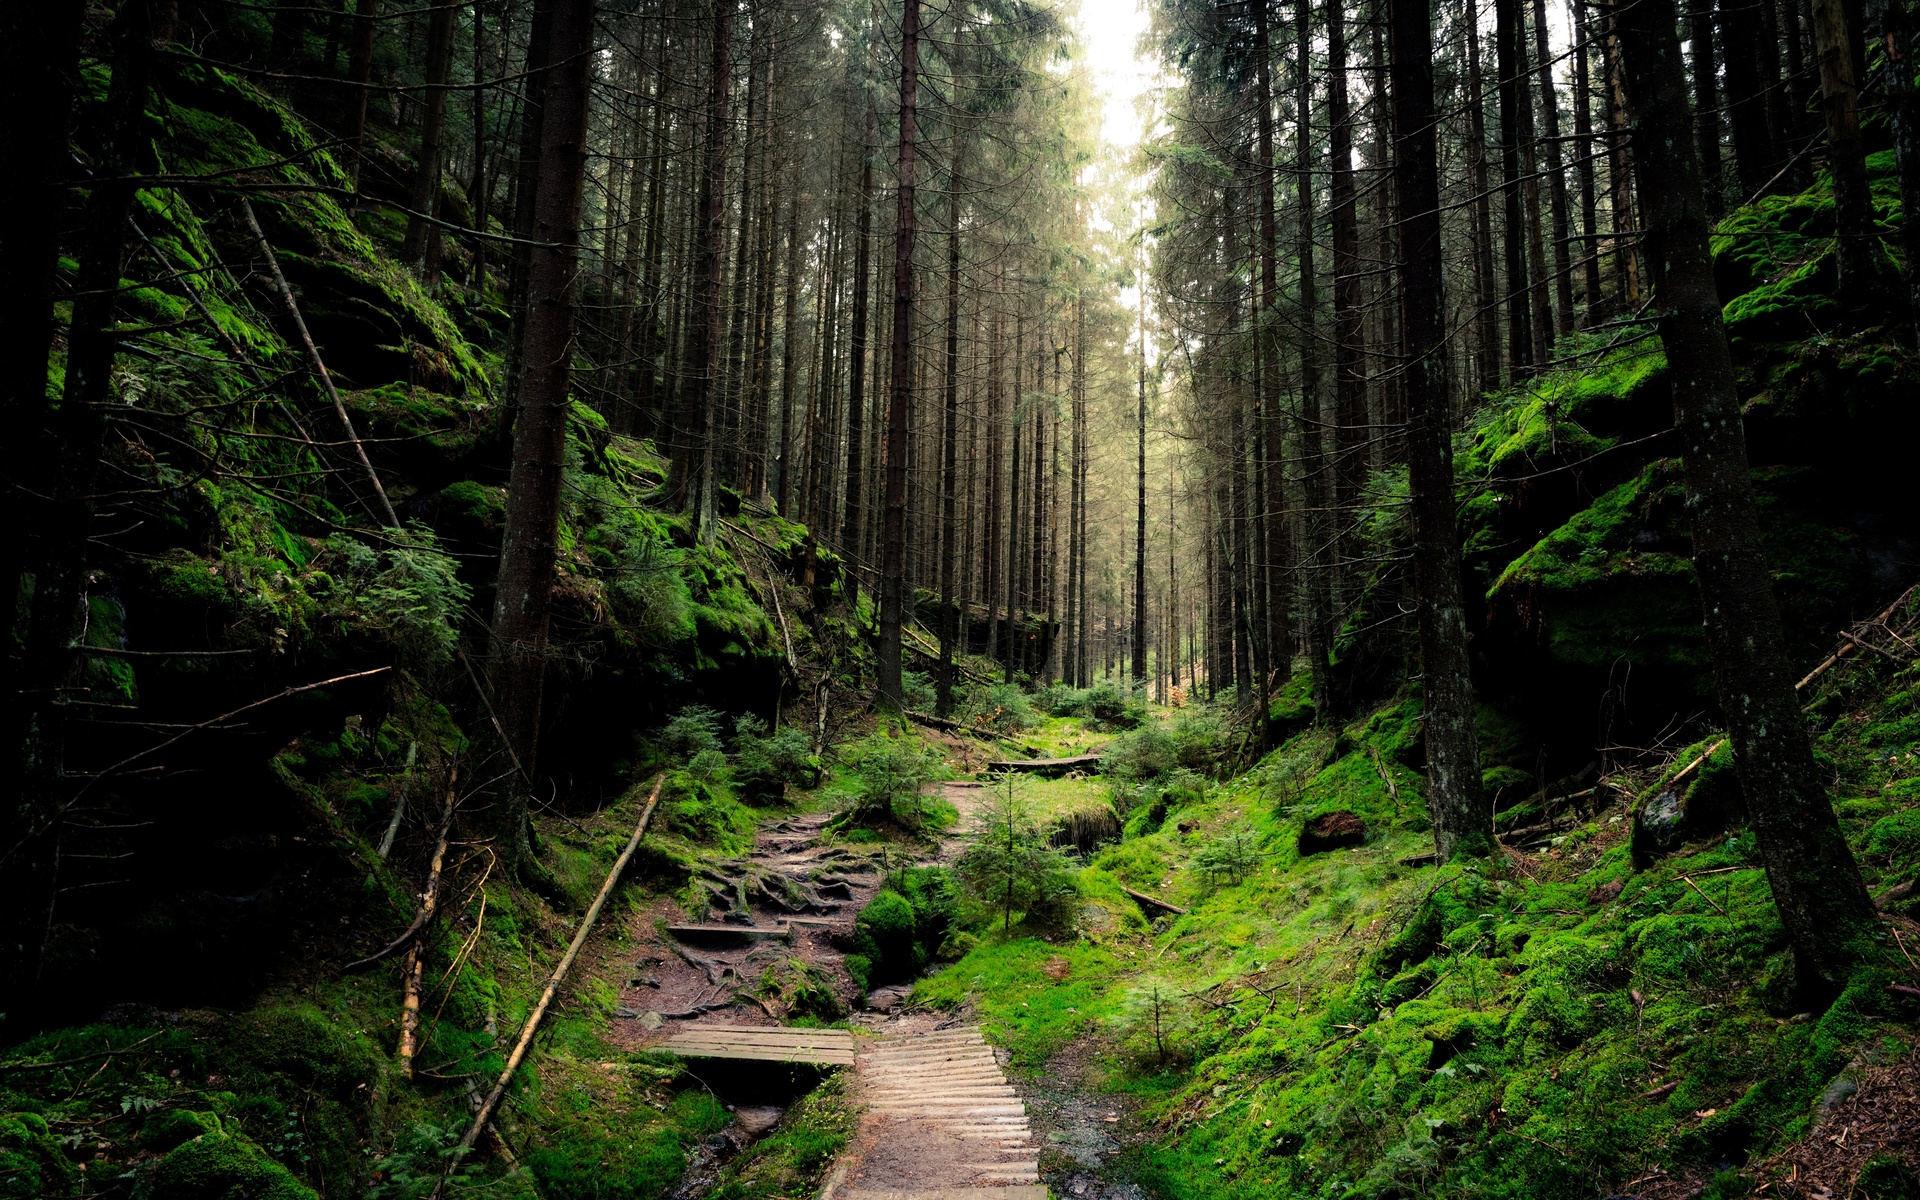 saxon, switzerland, national park, forest, green, path, foliage